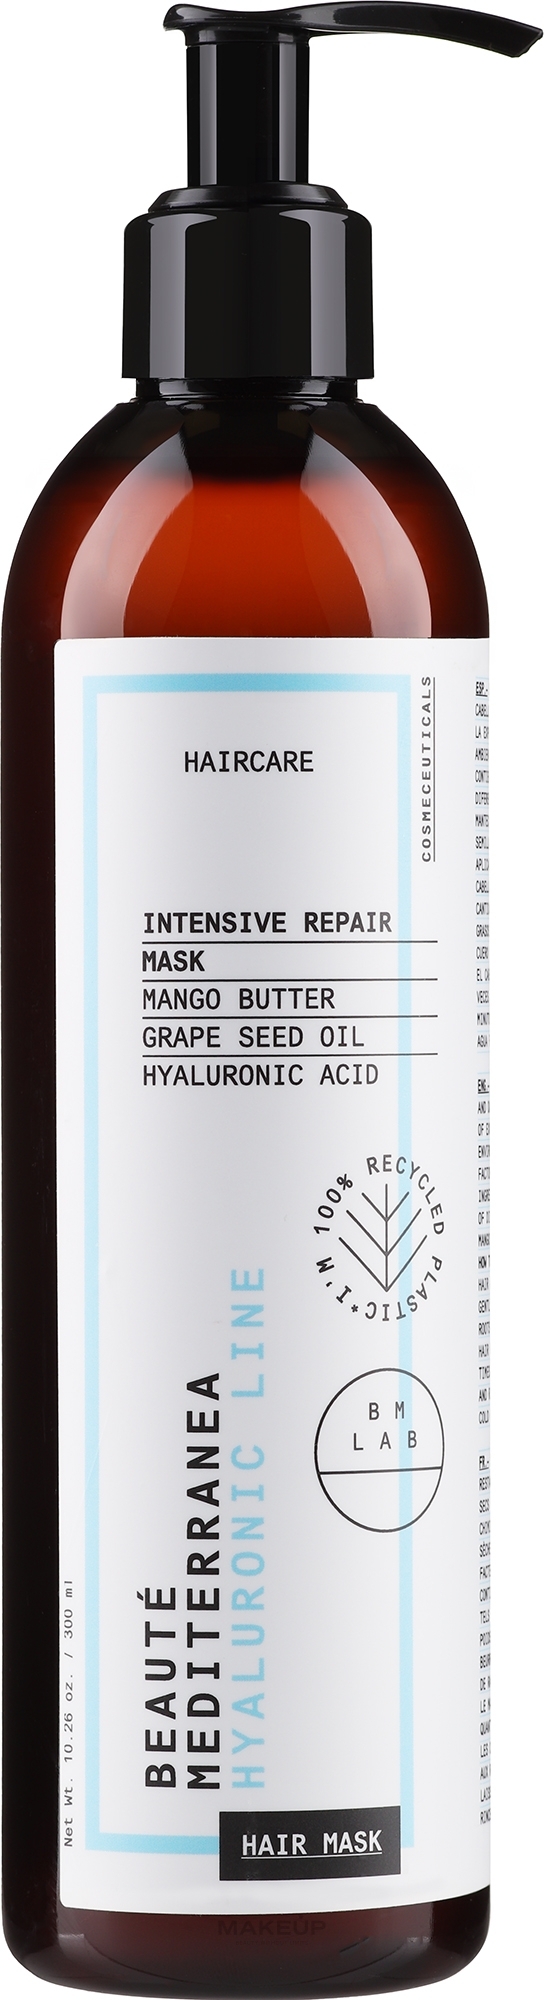 Маска для волос с гиалуроновой кислотой - Beaute Mediterranea High Tech Hyaluronic Hydra Mask — фото 300ml